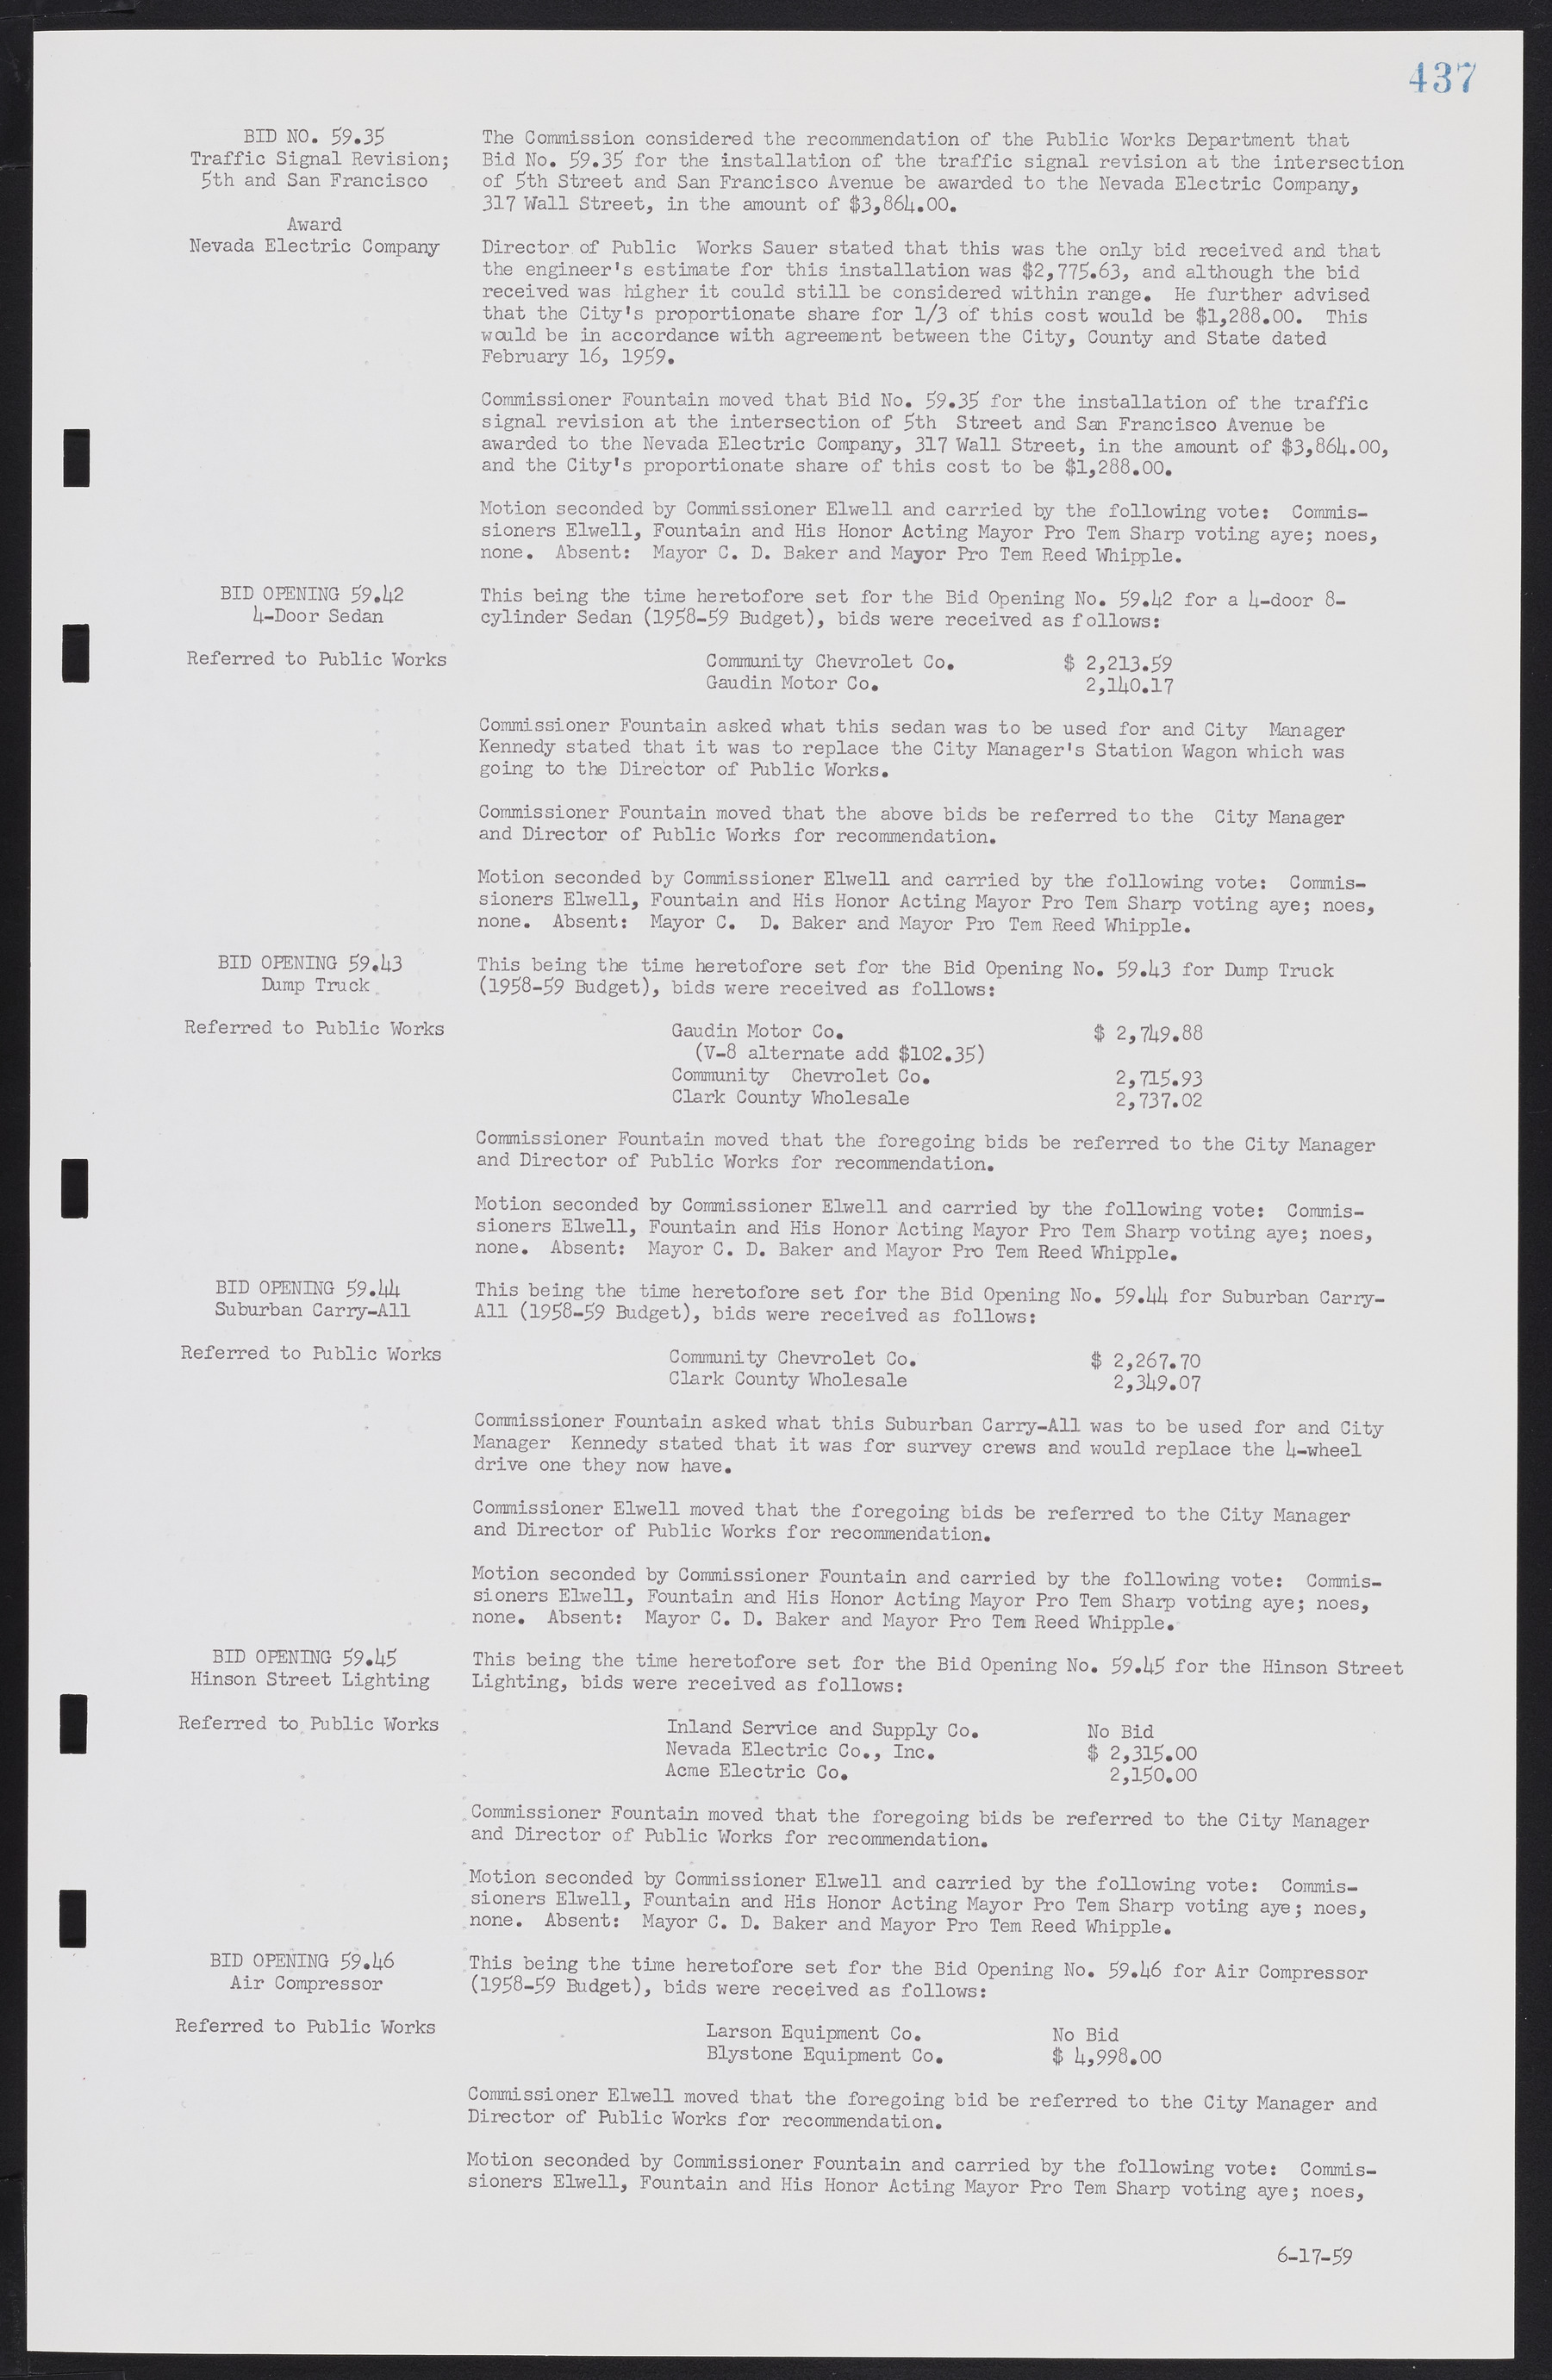 Las Vegas City Commission Minutes, November 20, 1957 to December 2, 1959, lvc000011-473